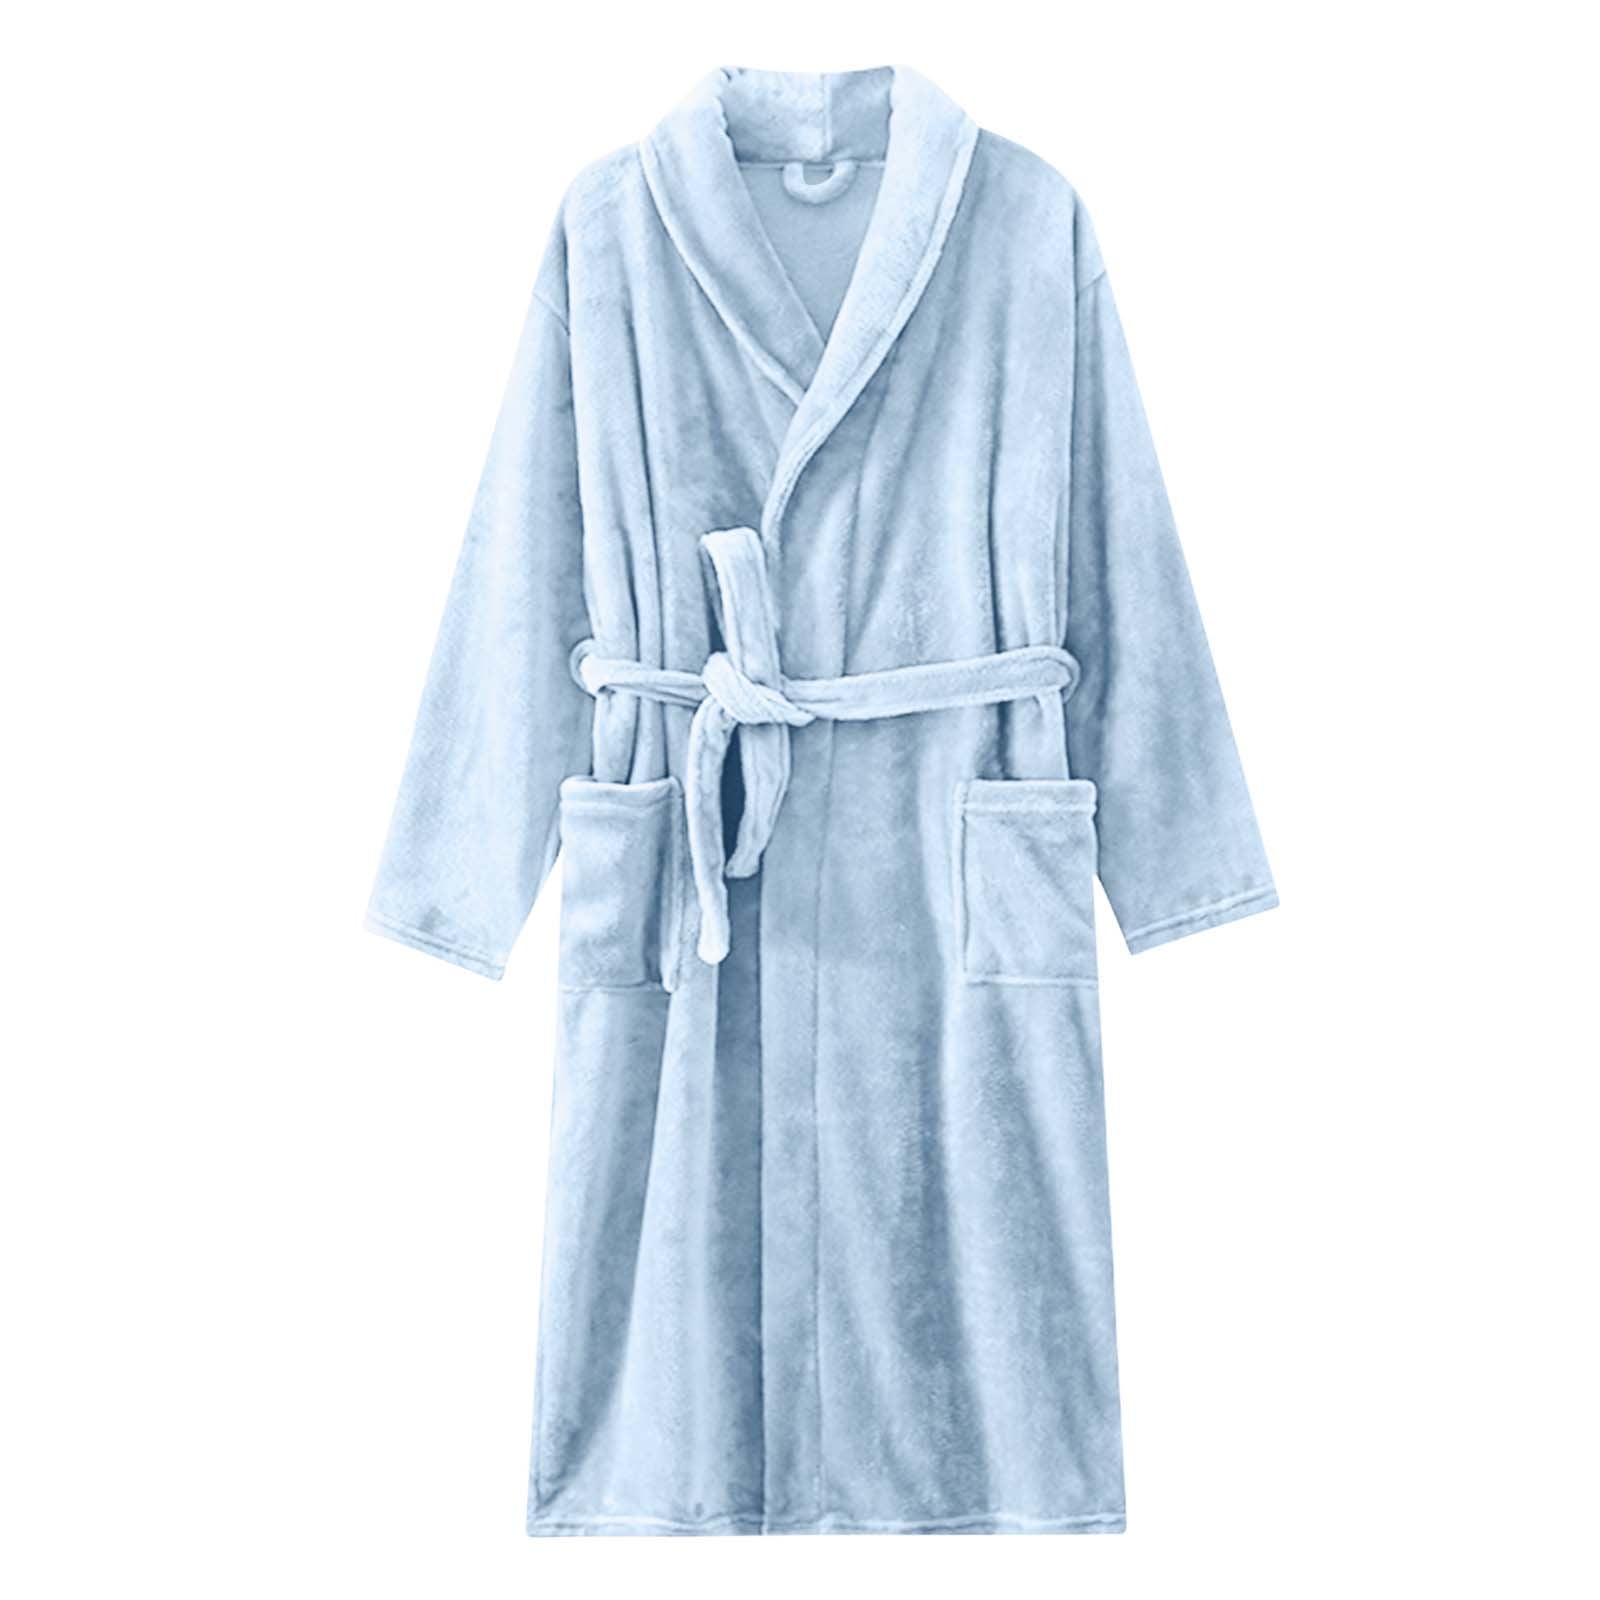 AOOCHASLIY Bath Robes for Women Clearance House Robes Bathrobe ...